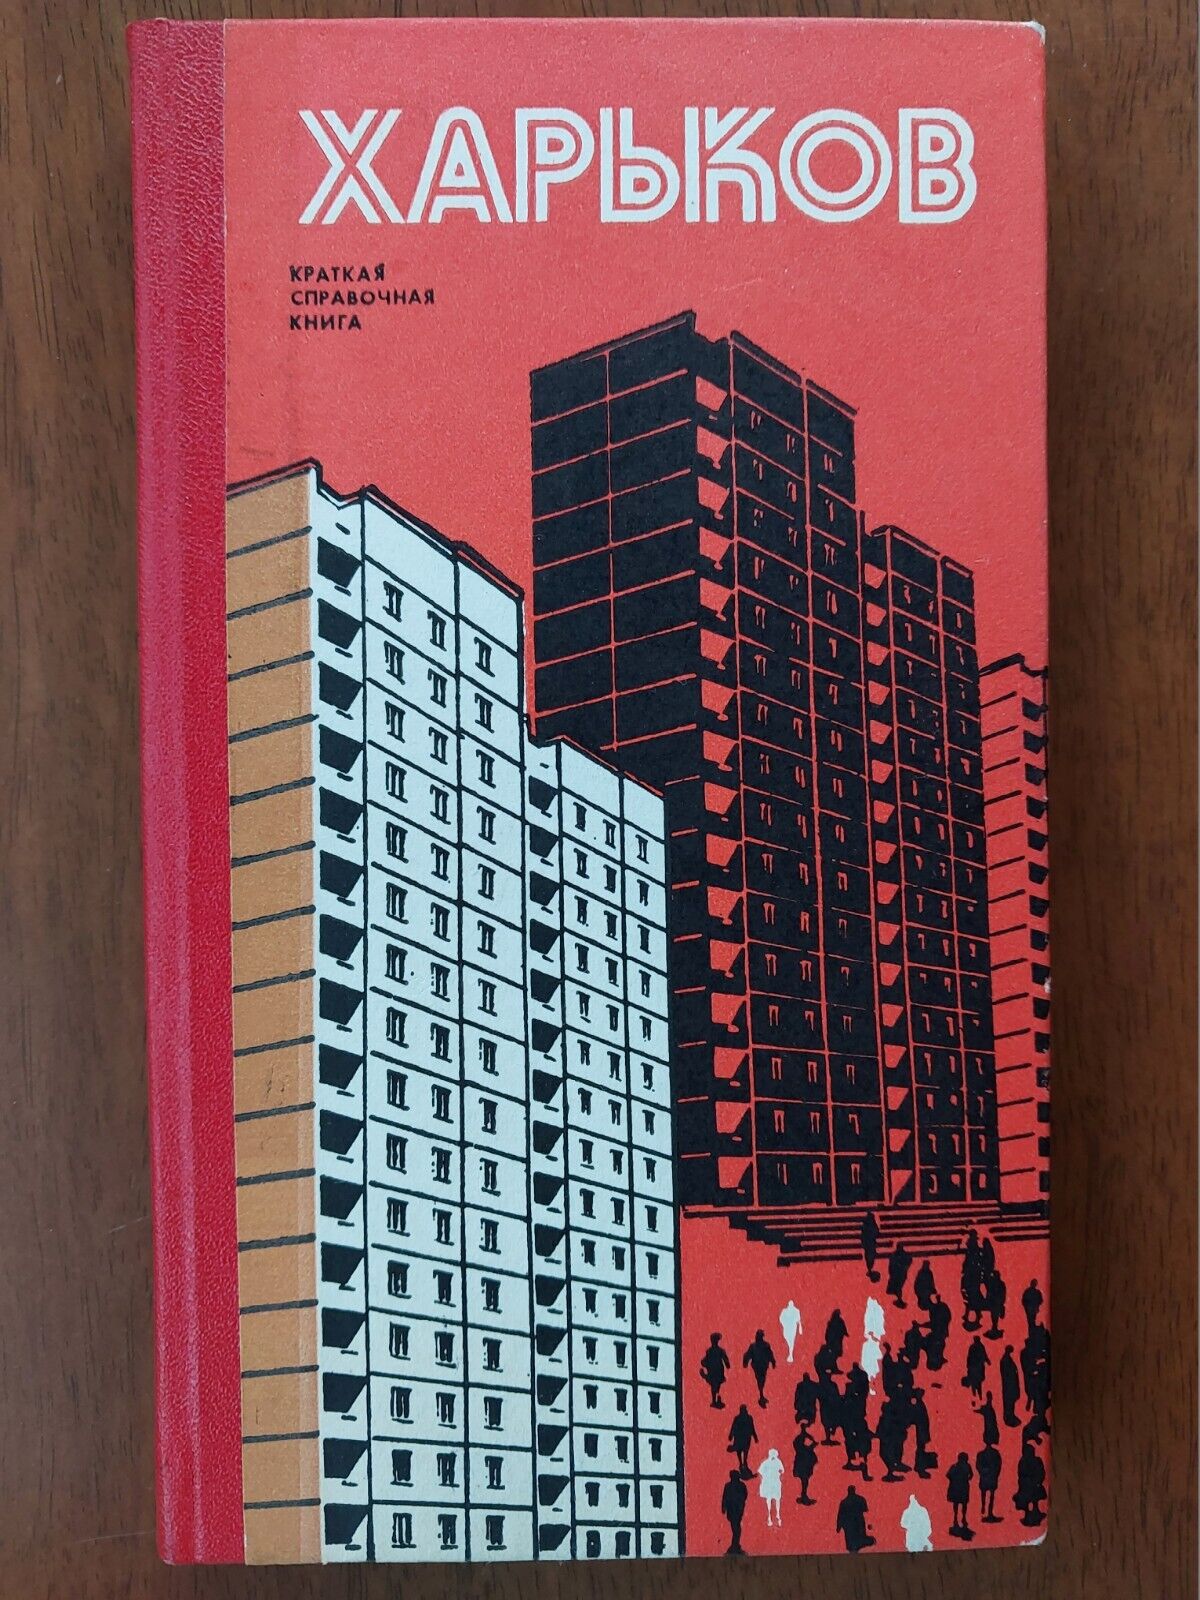 1976 ~ Vintage Soviet ILLUSTRATED Reference Book KHARKOV ~ ХАРЬКОВ ~ Short Guide